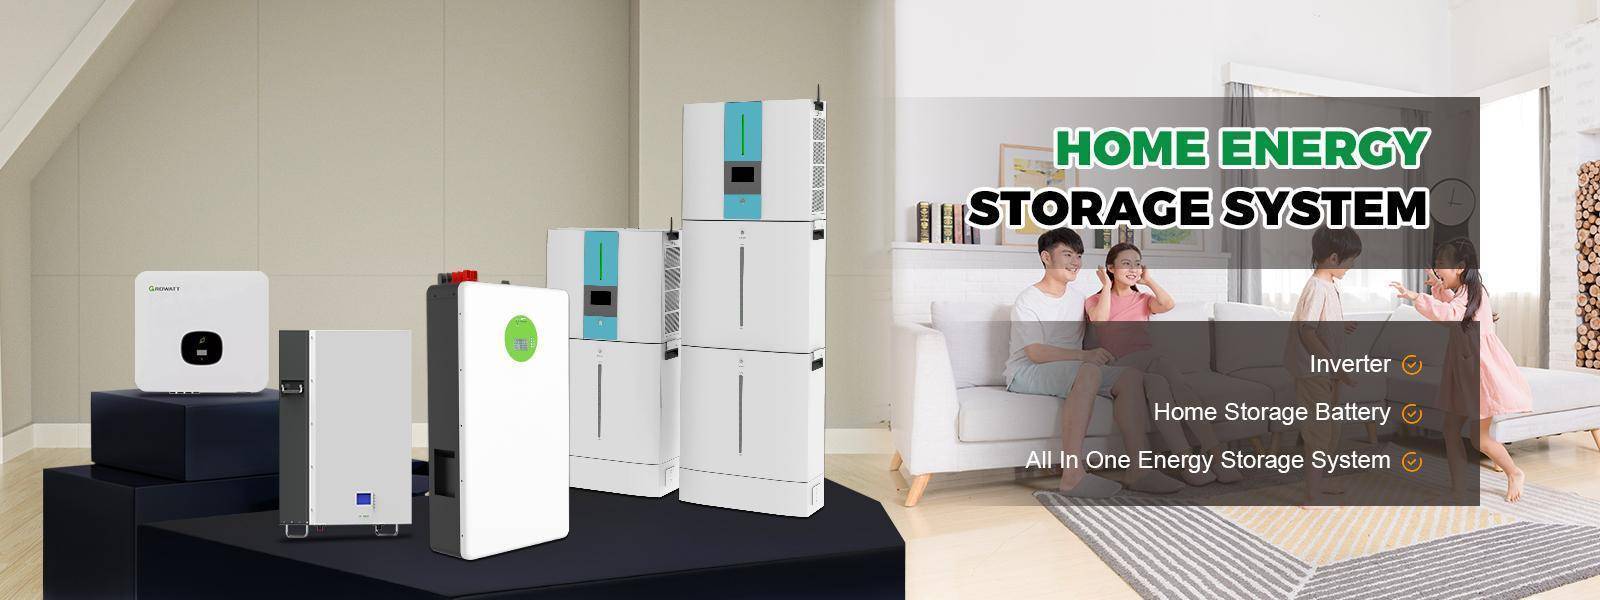 Home Energy Storage System 1